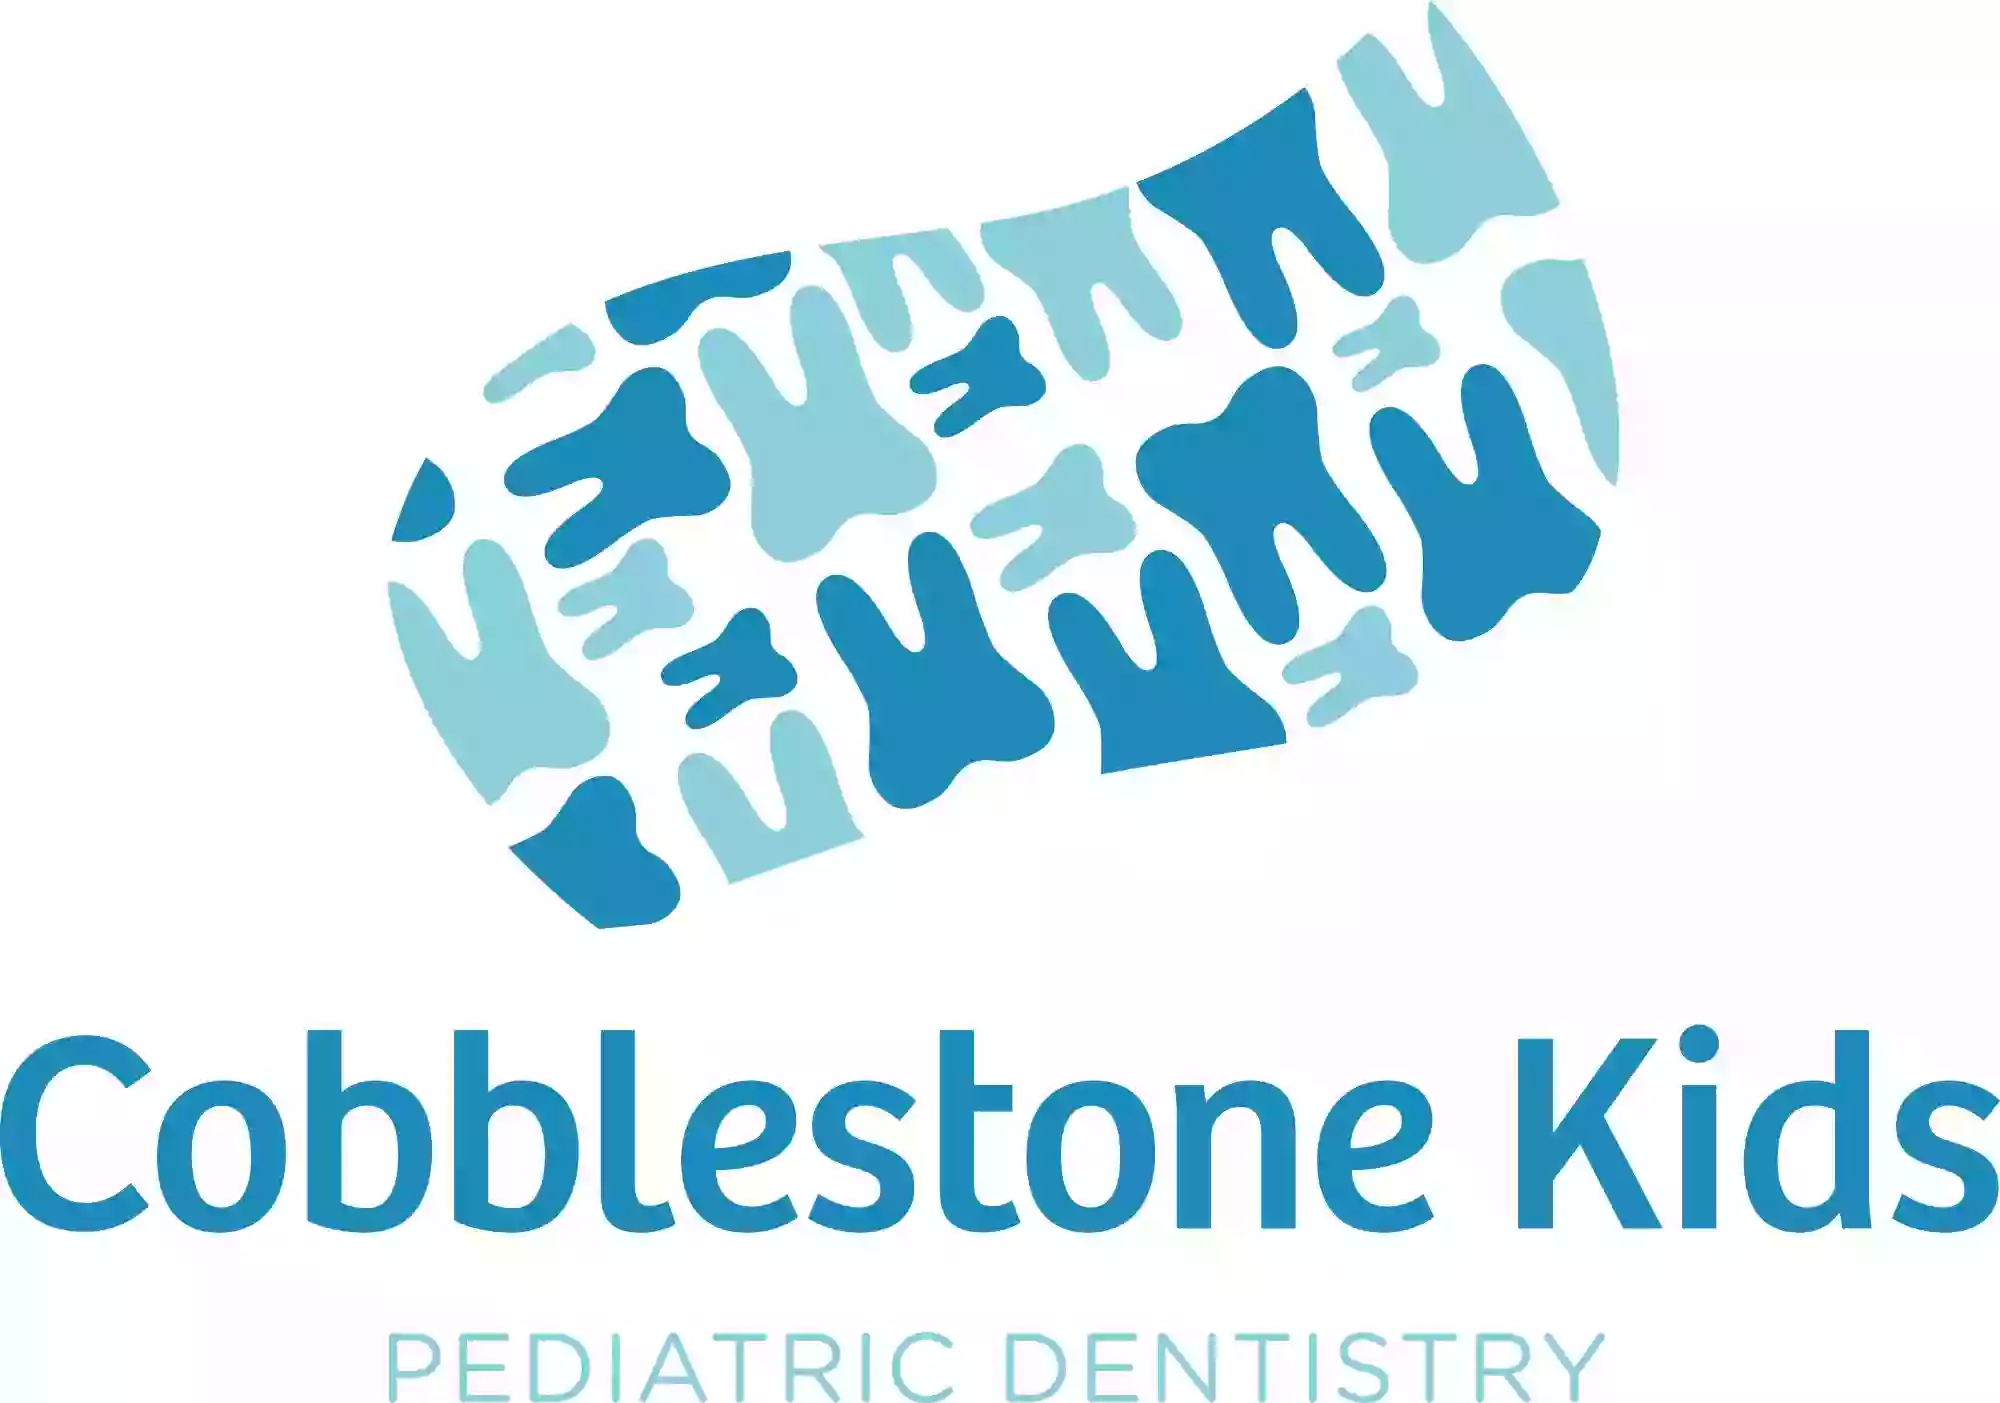 Cobblestone Kids Pediatric Dentistry of New Jersey